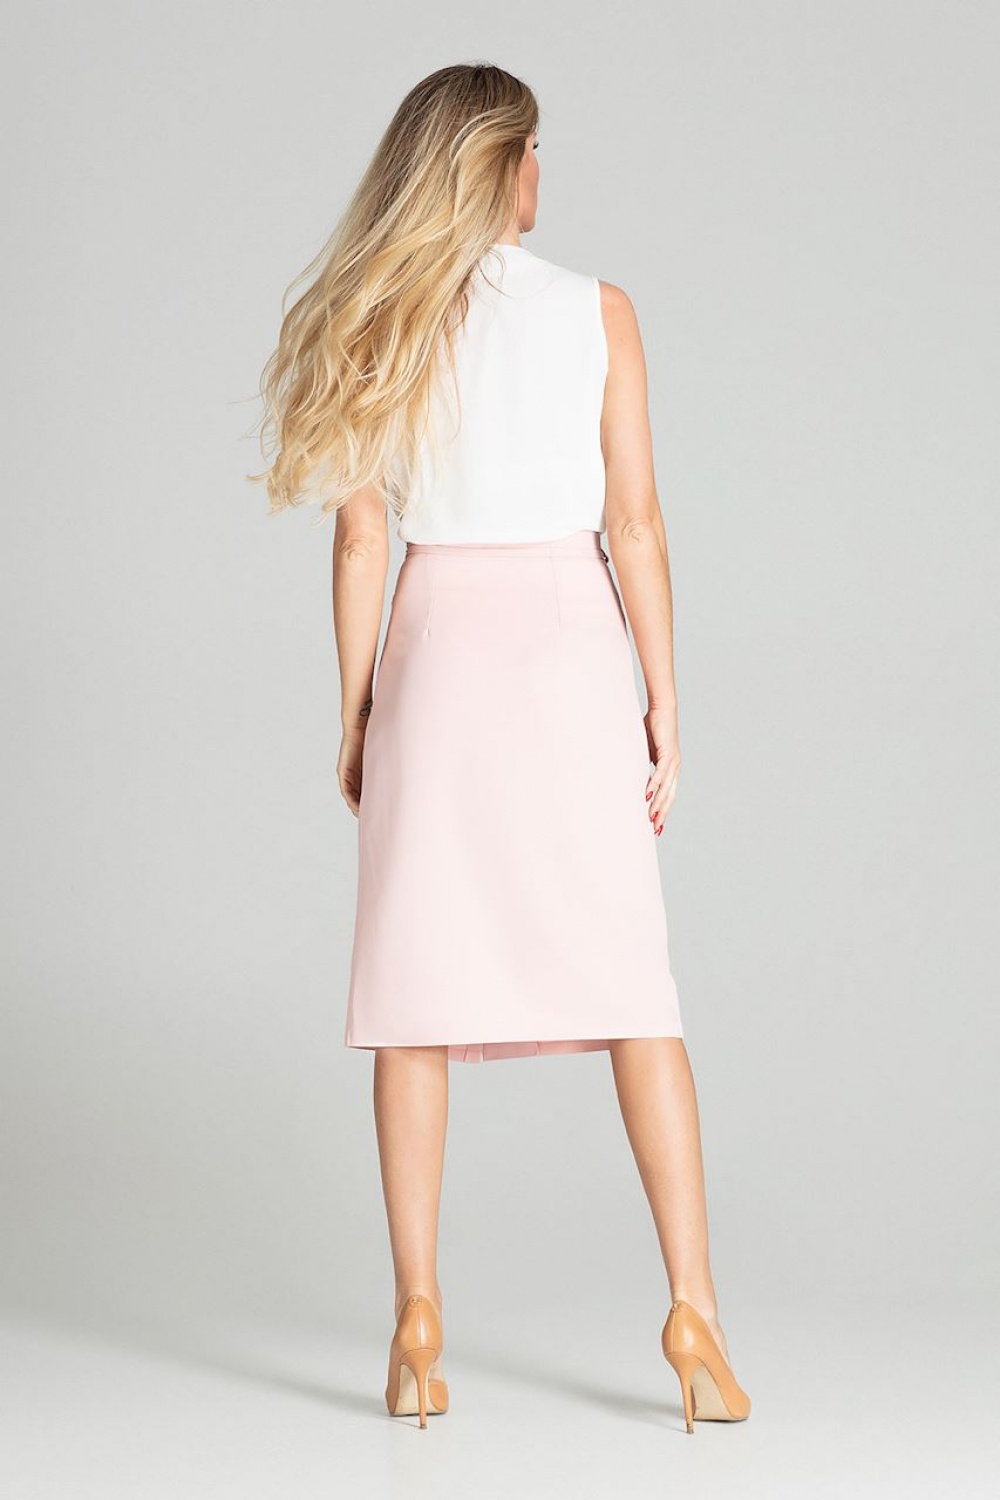  Skirt model 141759 Figl  pink